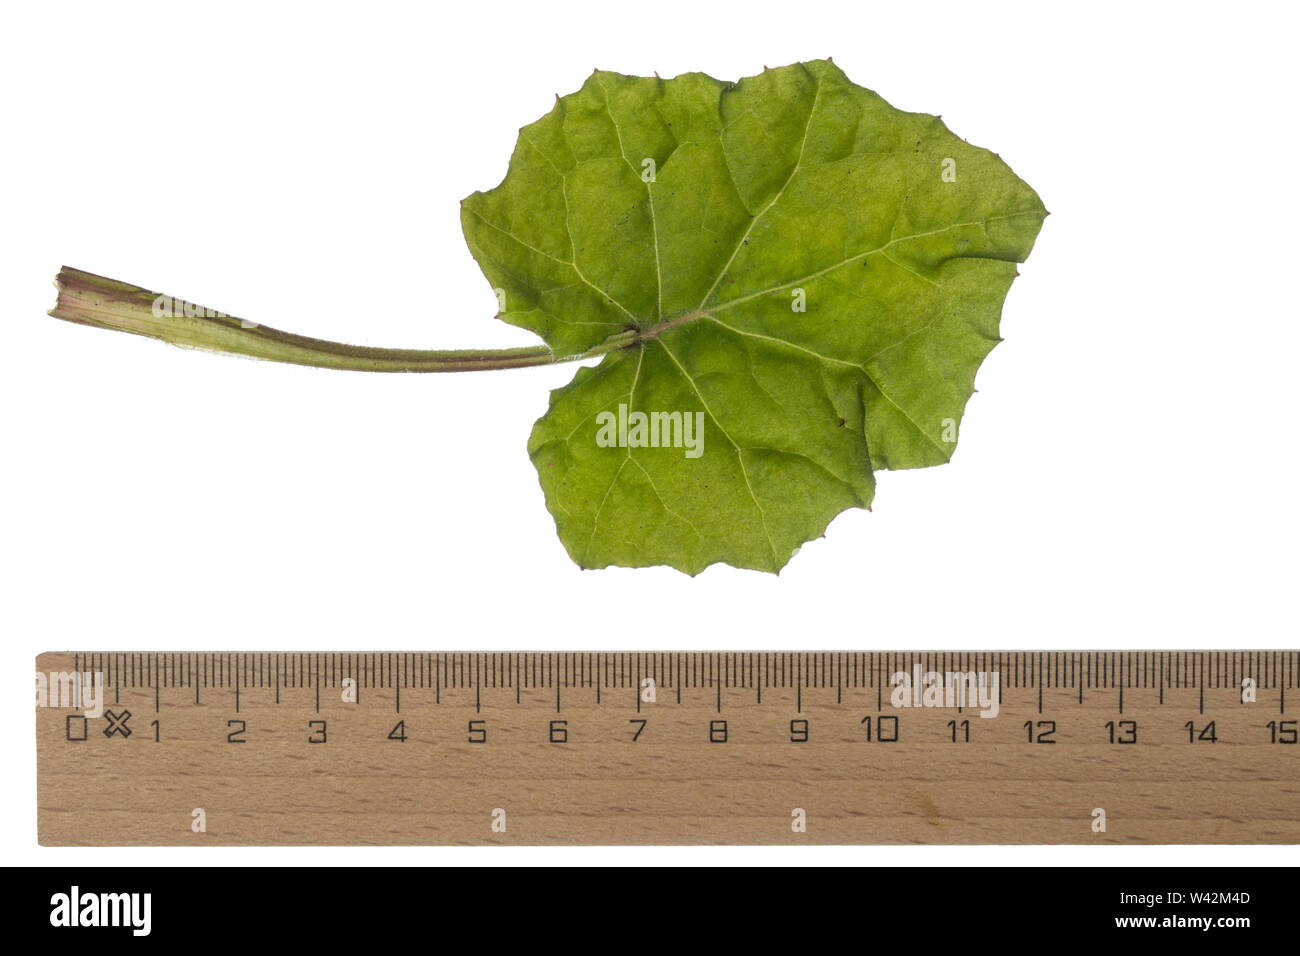 Huflattich, Huflattich-Blatt, Tussilago farfara, Coltsfoot, Pas d´âne, Tussilage. Blatt, Blätter, leaf, leaves Stock Photo